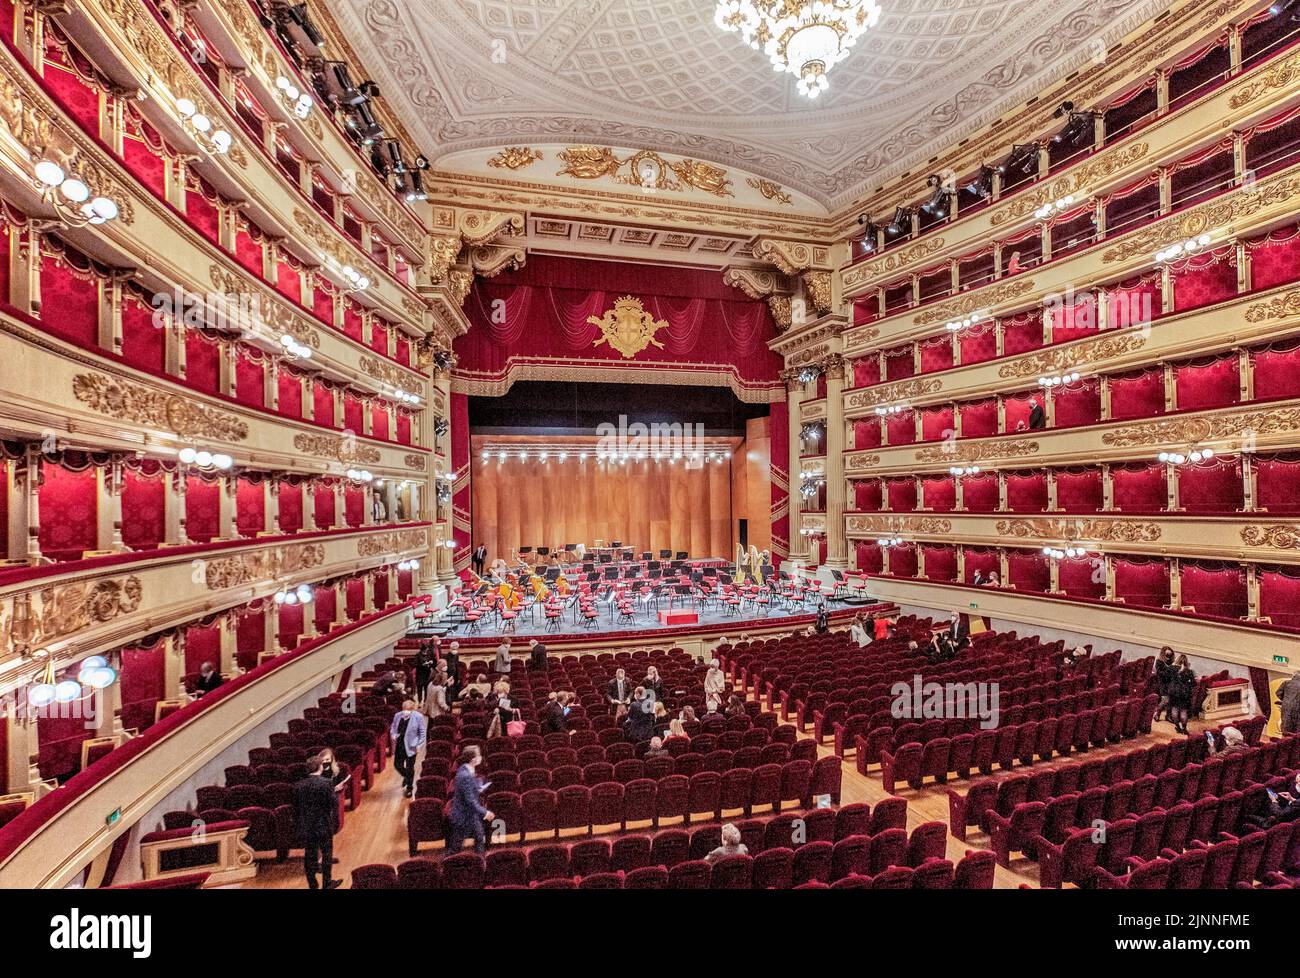 Auditorium, salle avec scène à la Scala, Teatro alla Scala, Milan, Lombardie, Italie du Nord, Italie Banque D'Images